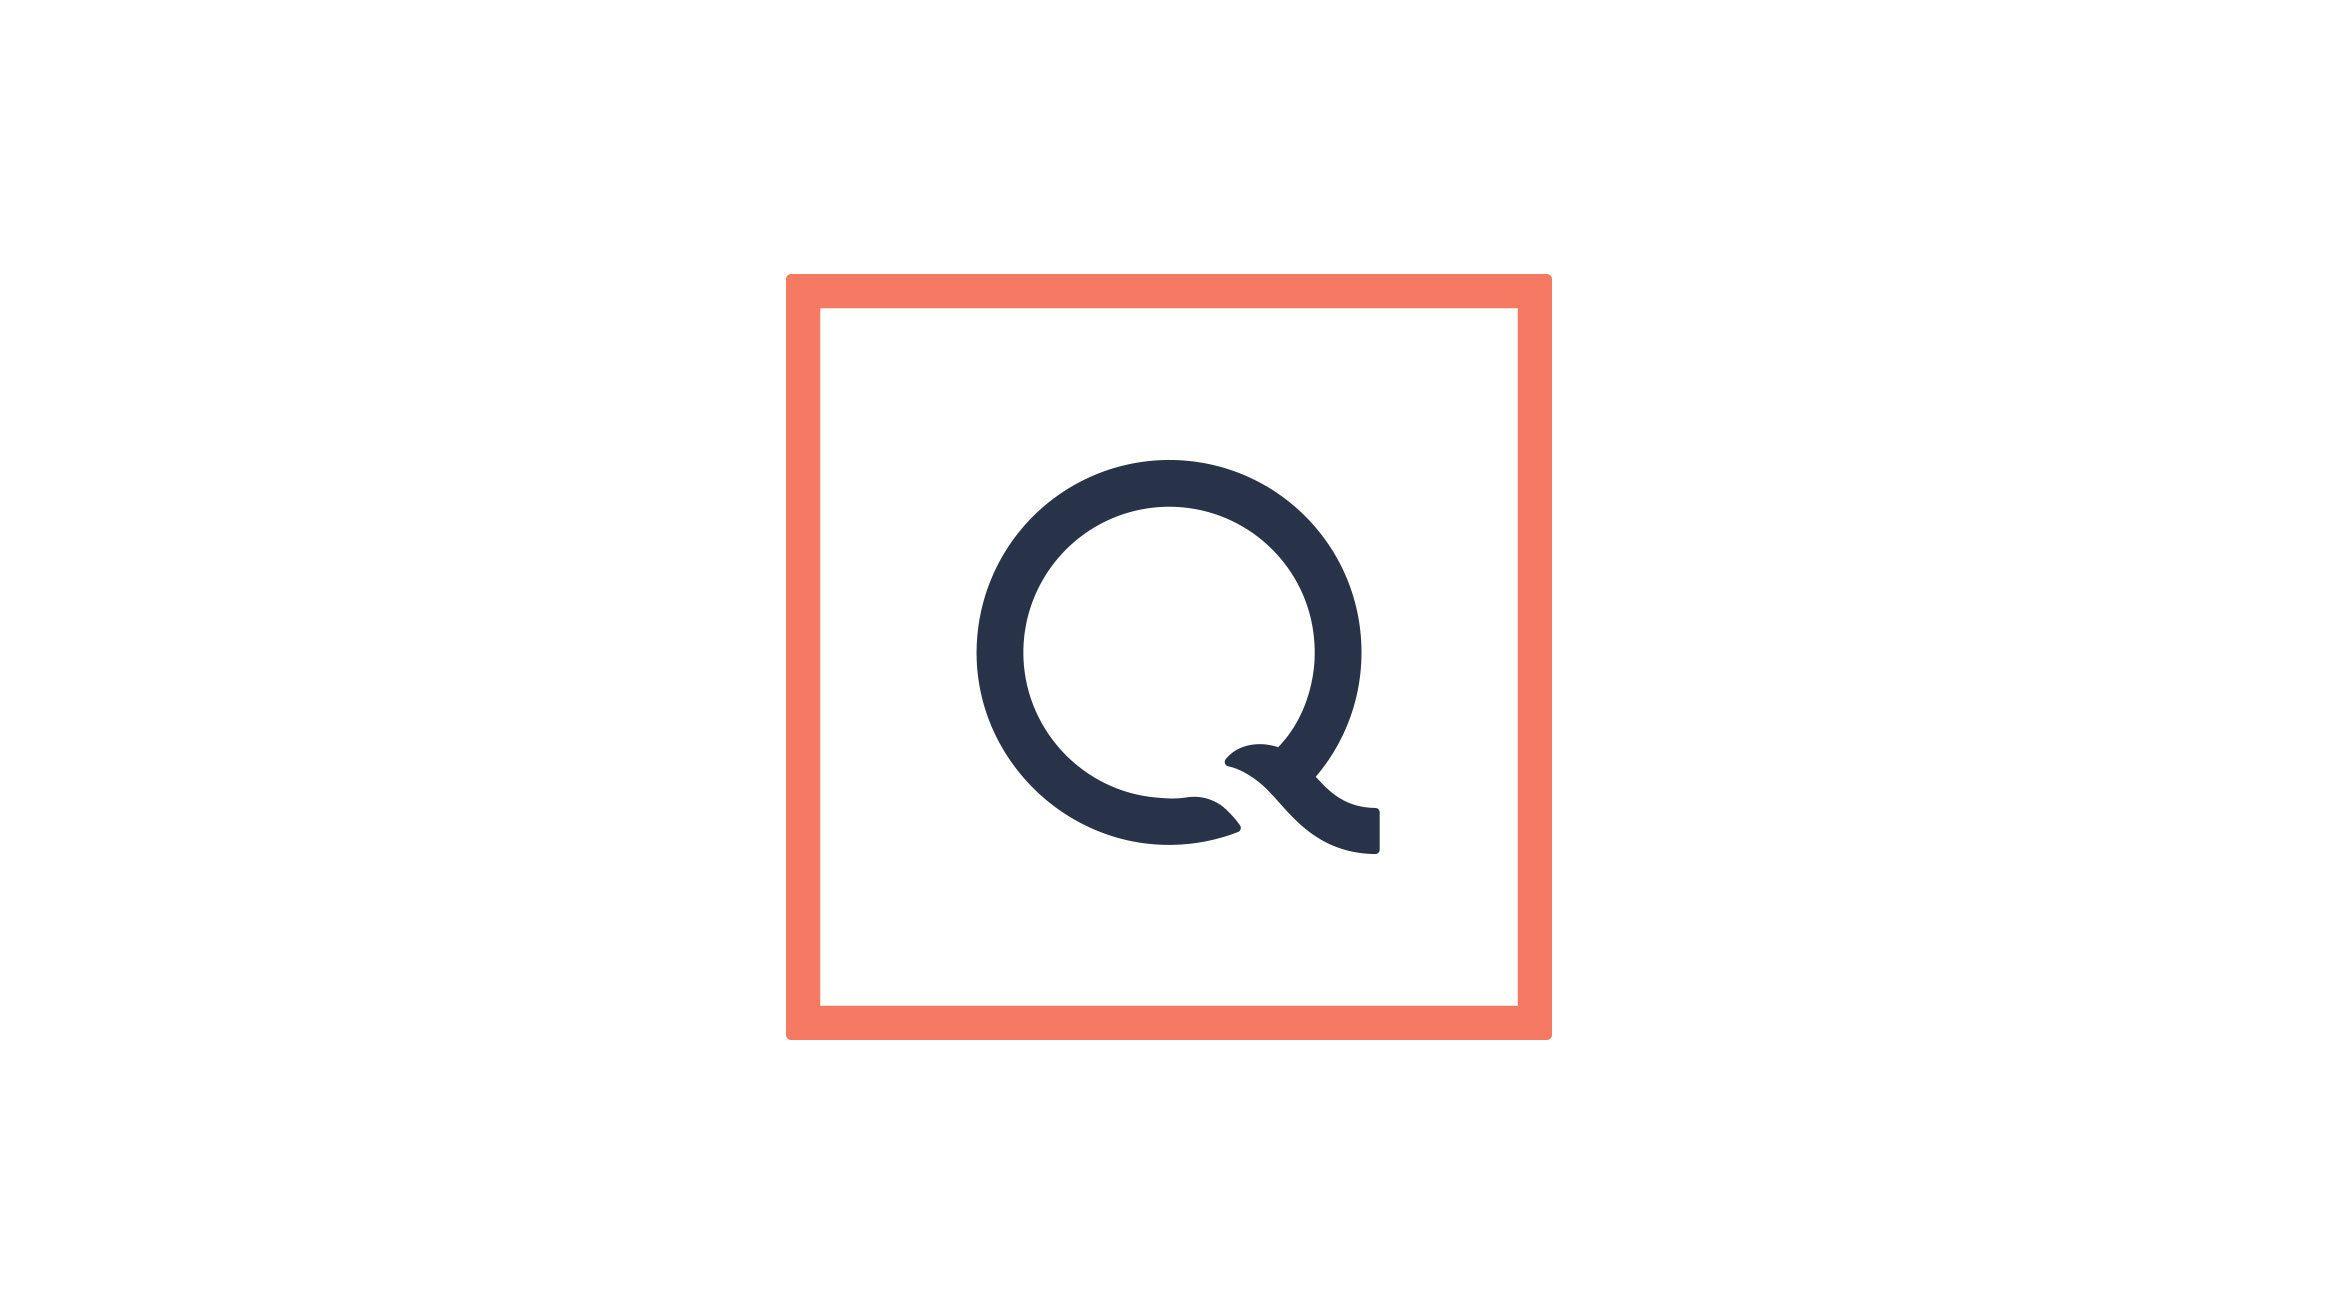 QVC.com Logo